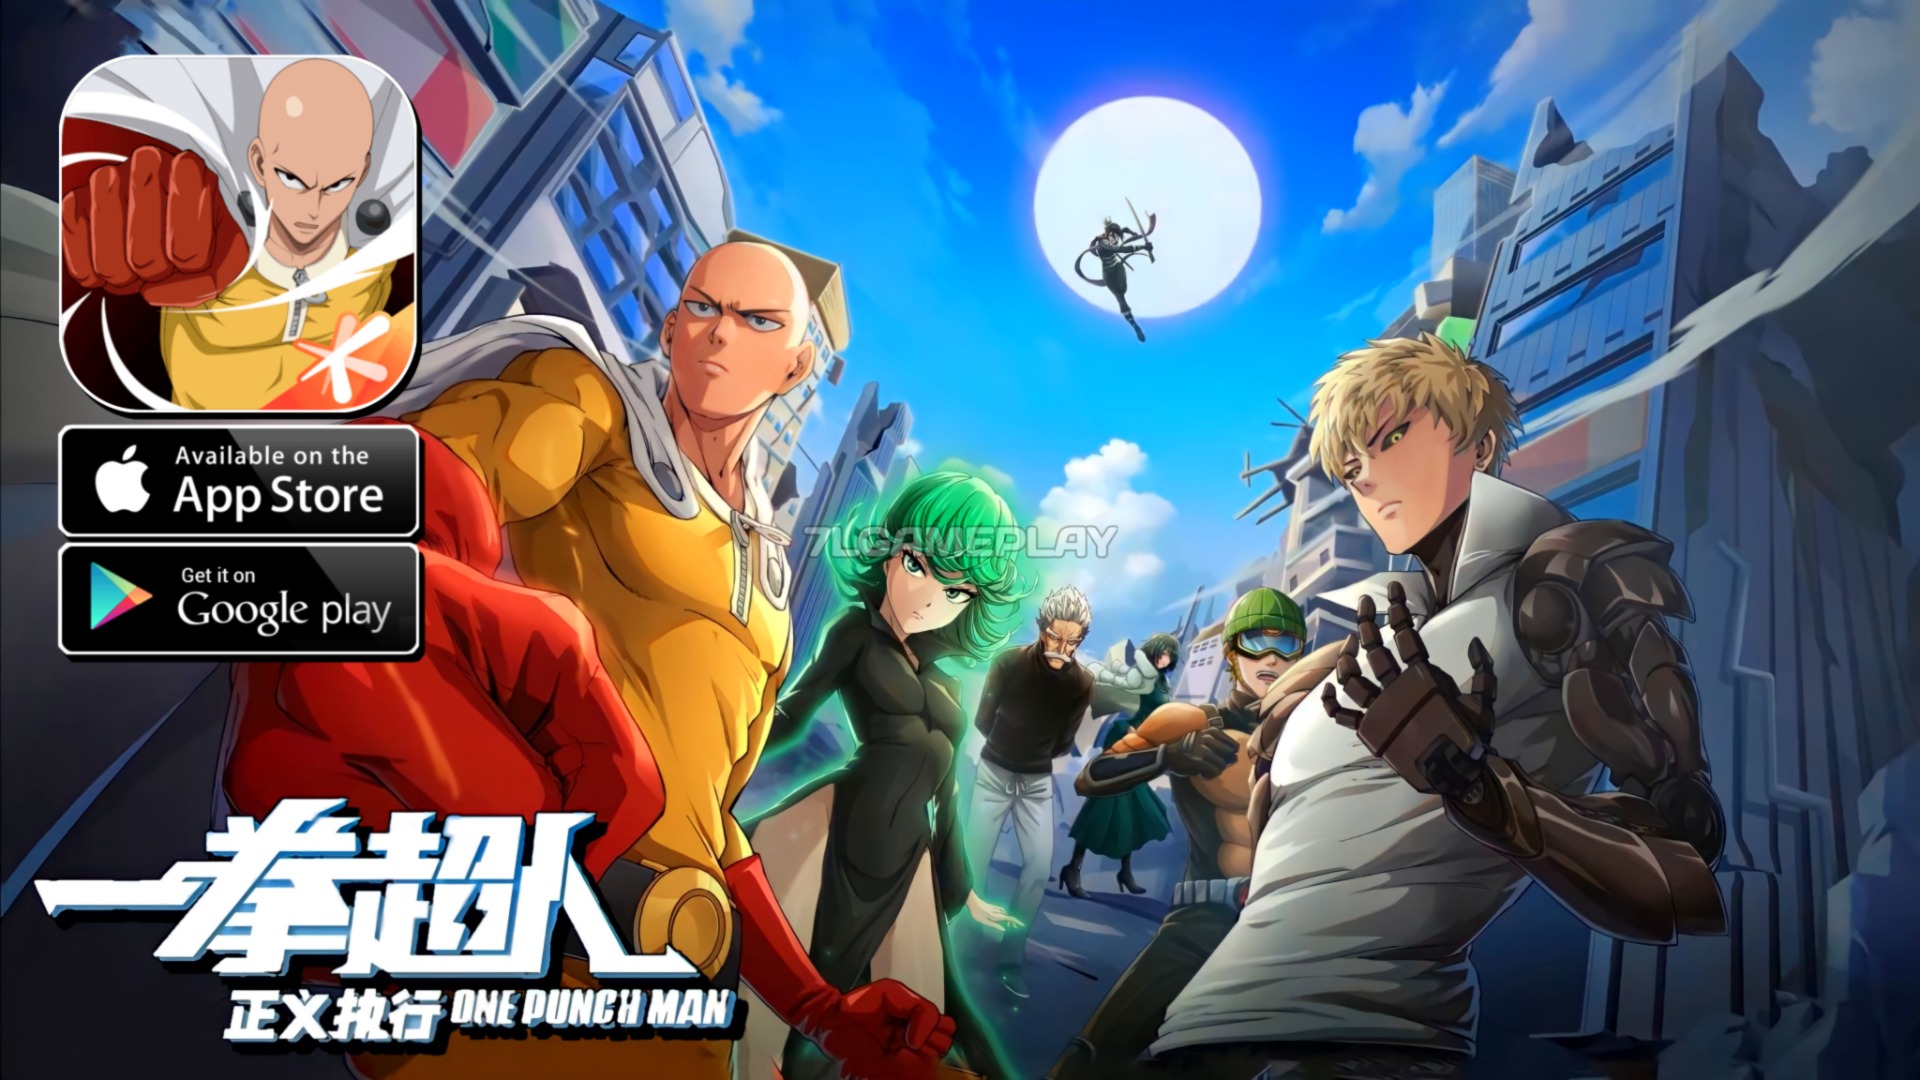 One Punch Man:Road to Hero 2.0 - Apps en Google Play